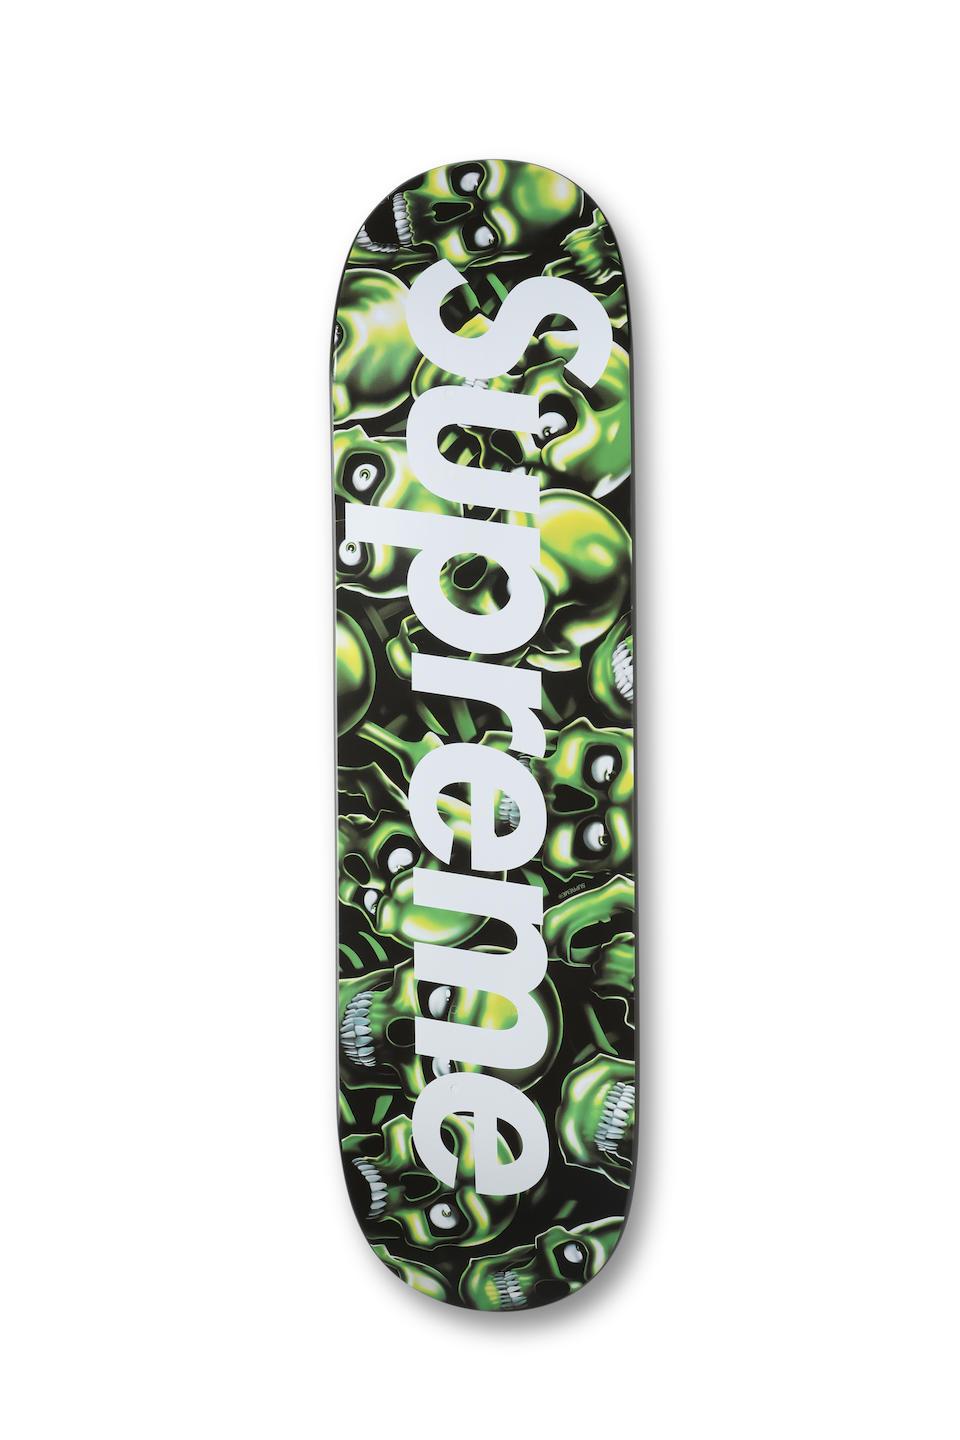 Supreme Skateboard Wallpapers - Top Free Supreme Skateboard 